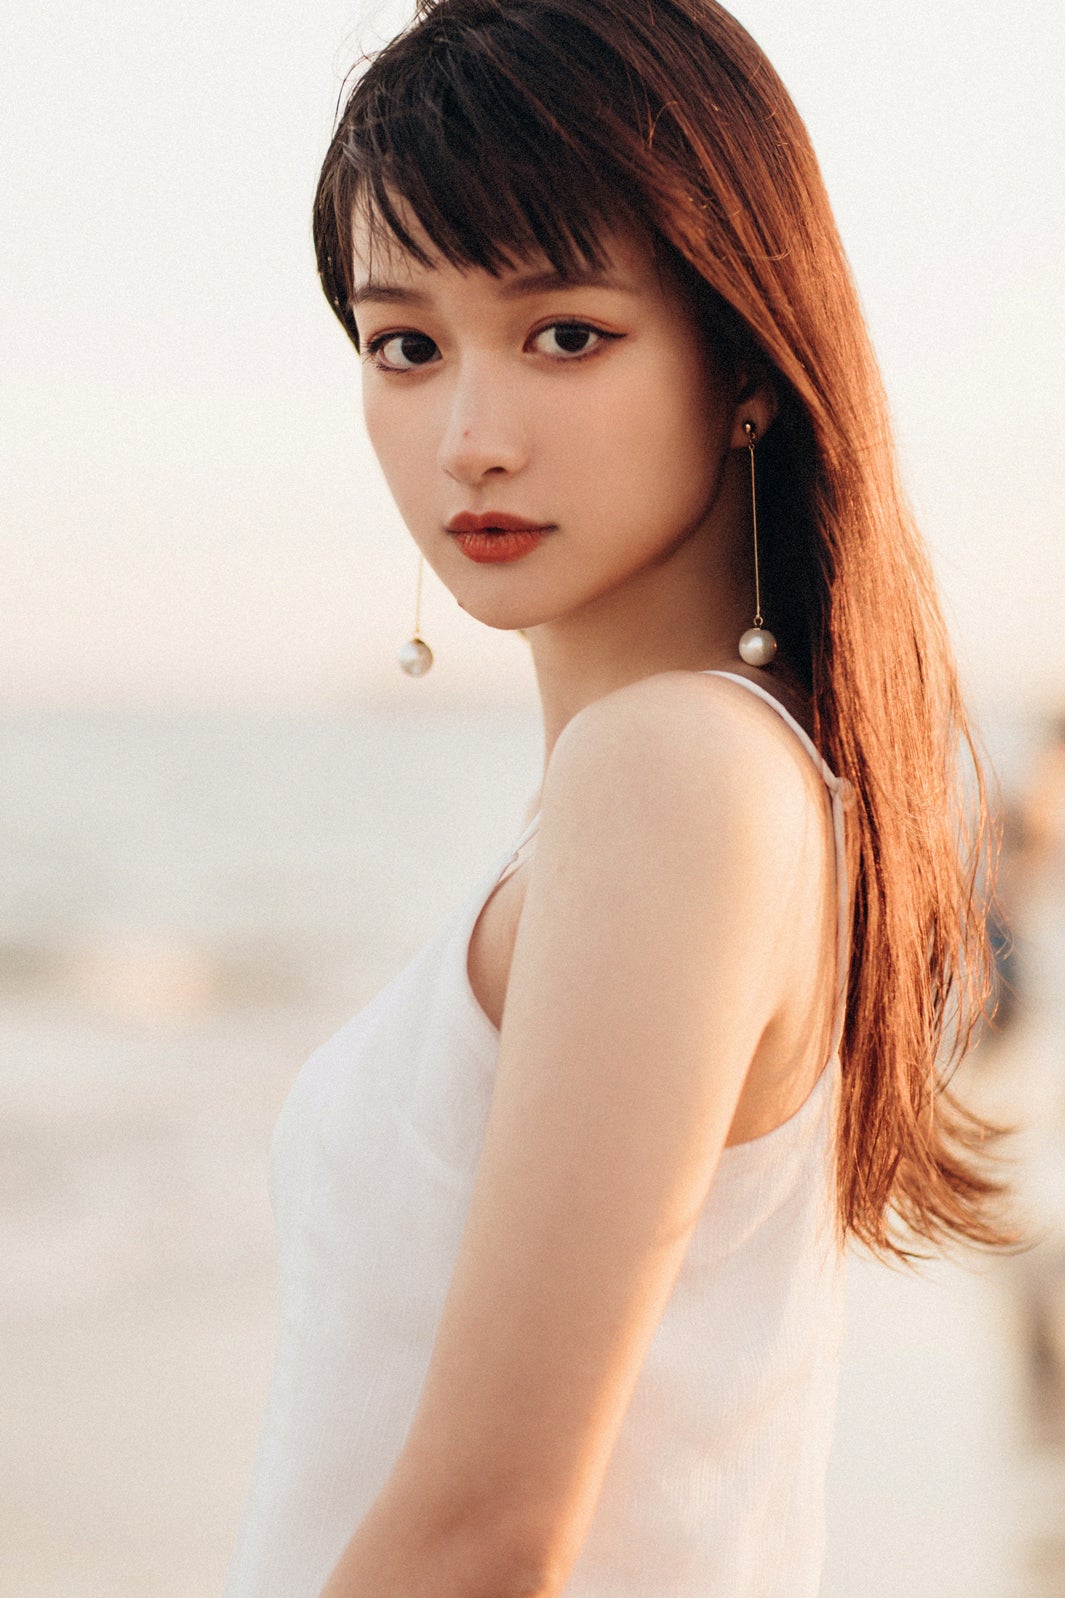 Snsで話題の中華美女 Susanって 透明感溢れる美貌 謎多き素顔に迫るインタビュー 注目の人物 モデルプレス